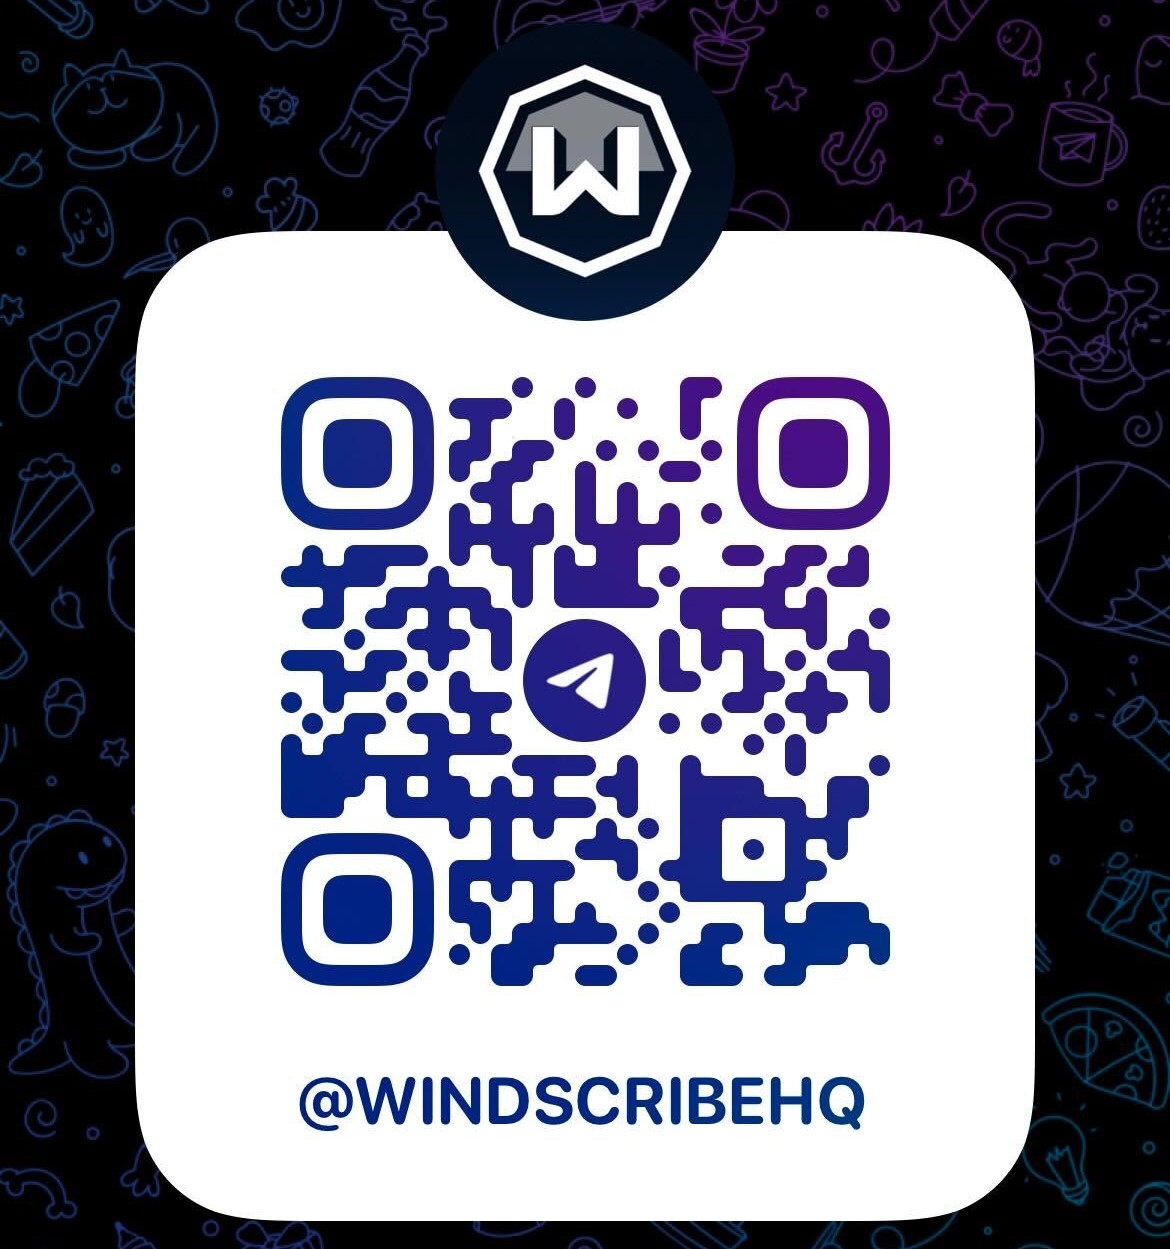 QR Code for Windscribe's Telegram channel